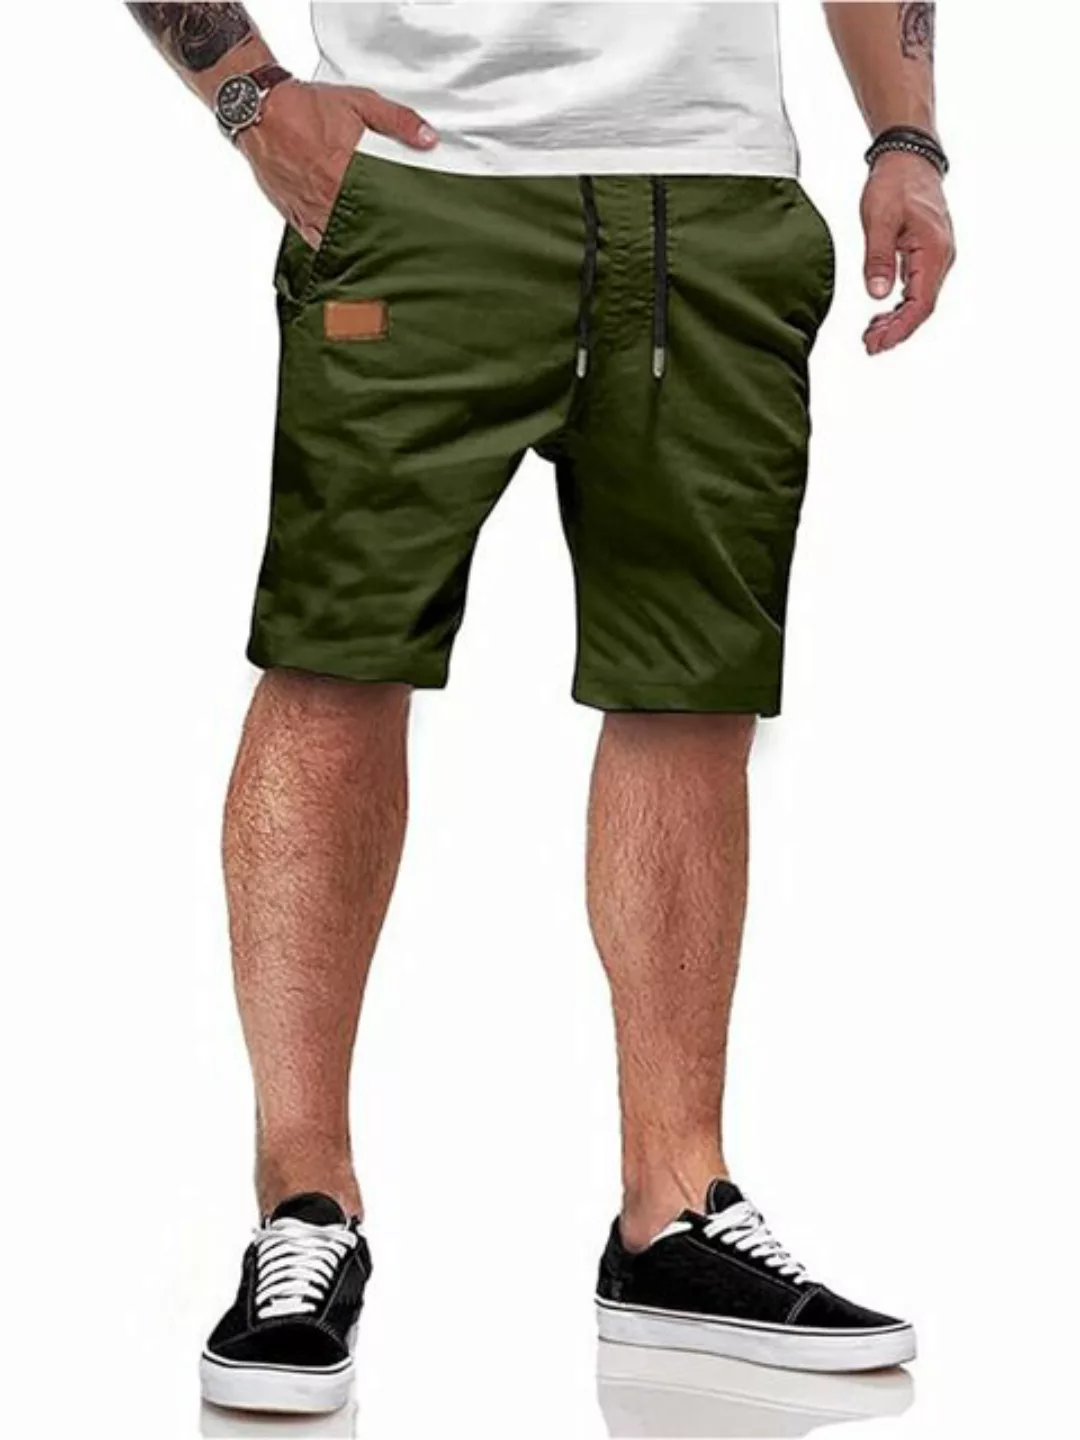 KIKI Shorts Herren Shorts Sommer Mit Taschen Joggpants Boardshorts Boxersho günstig online kaufen